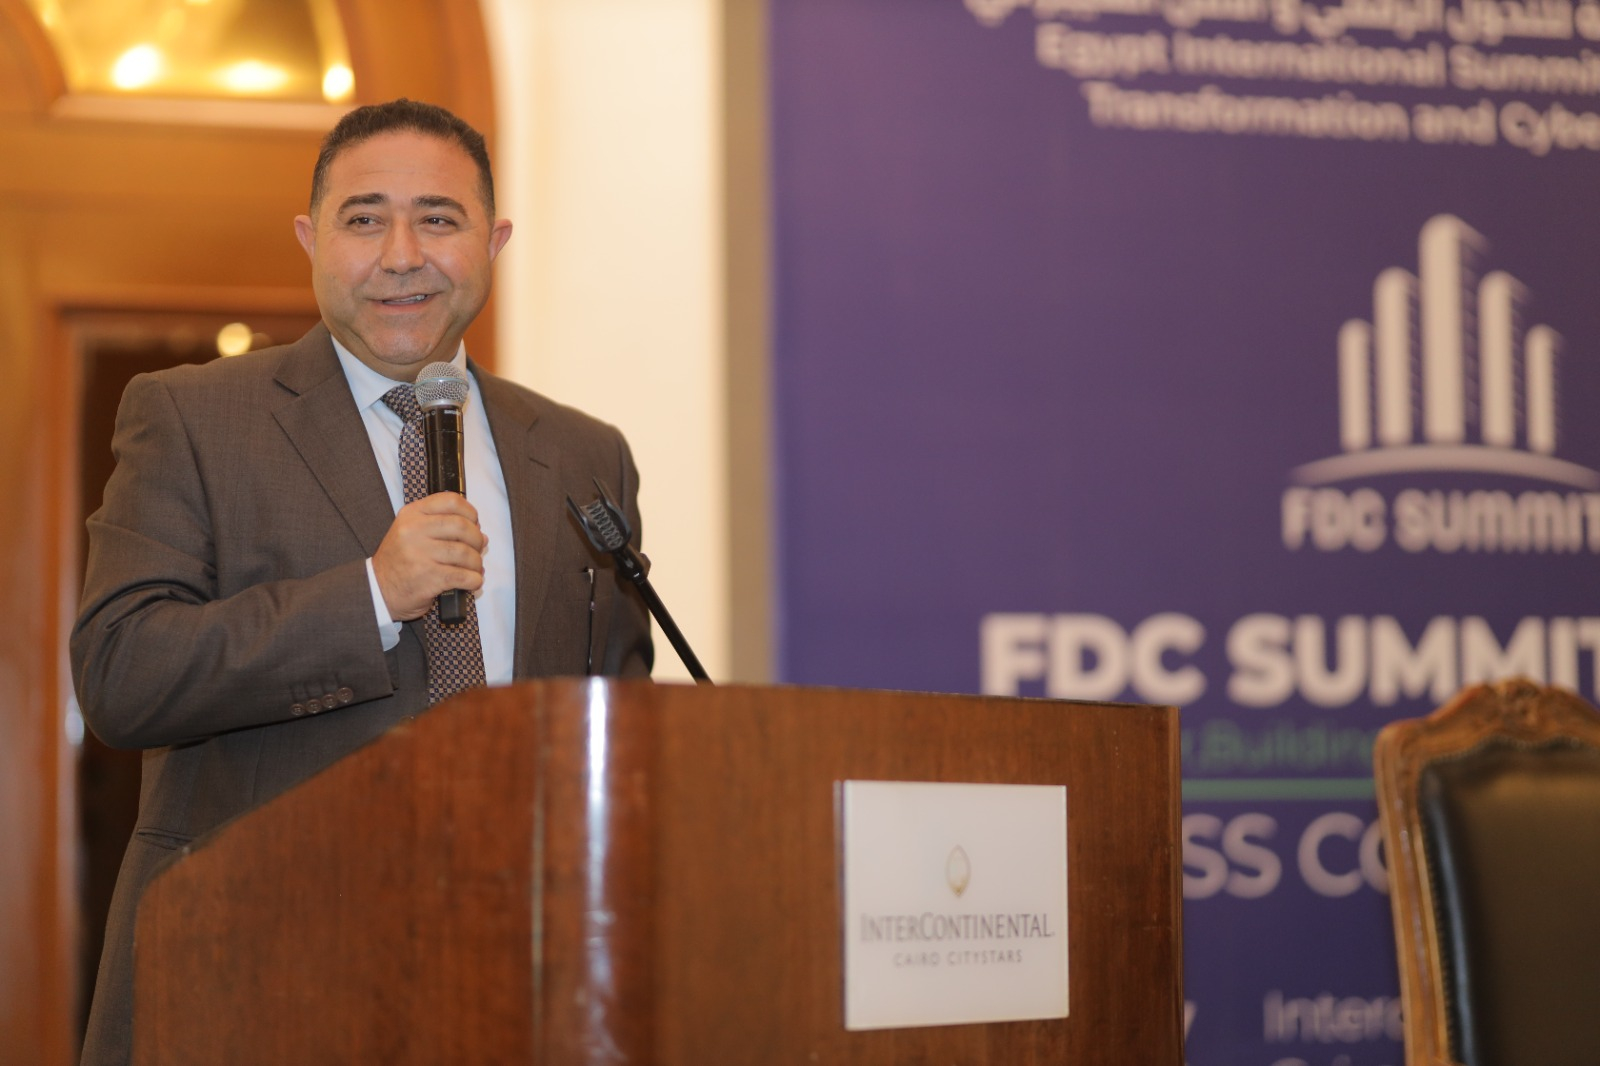 FDC Summit تعلن ملامح دورتها السادسة في مركز مصر للمعارض والمؤتمرات الدولية 